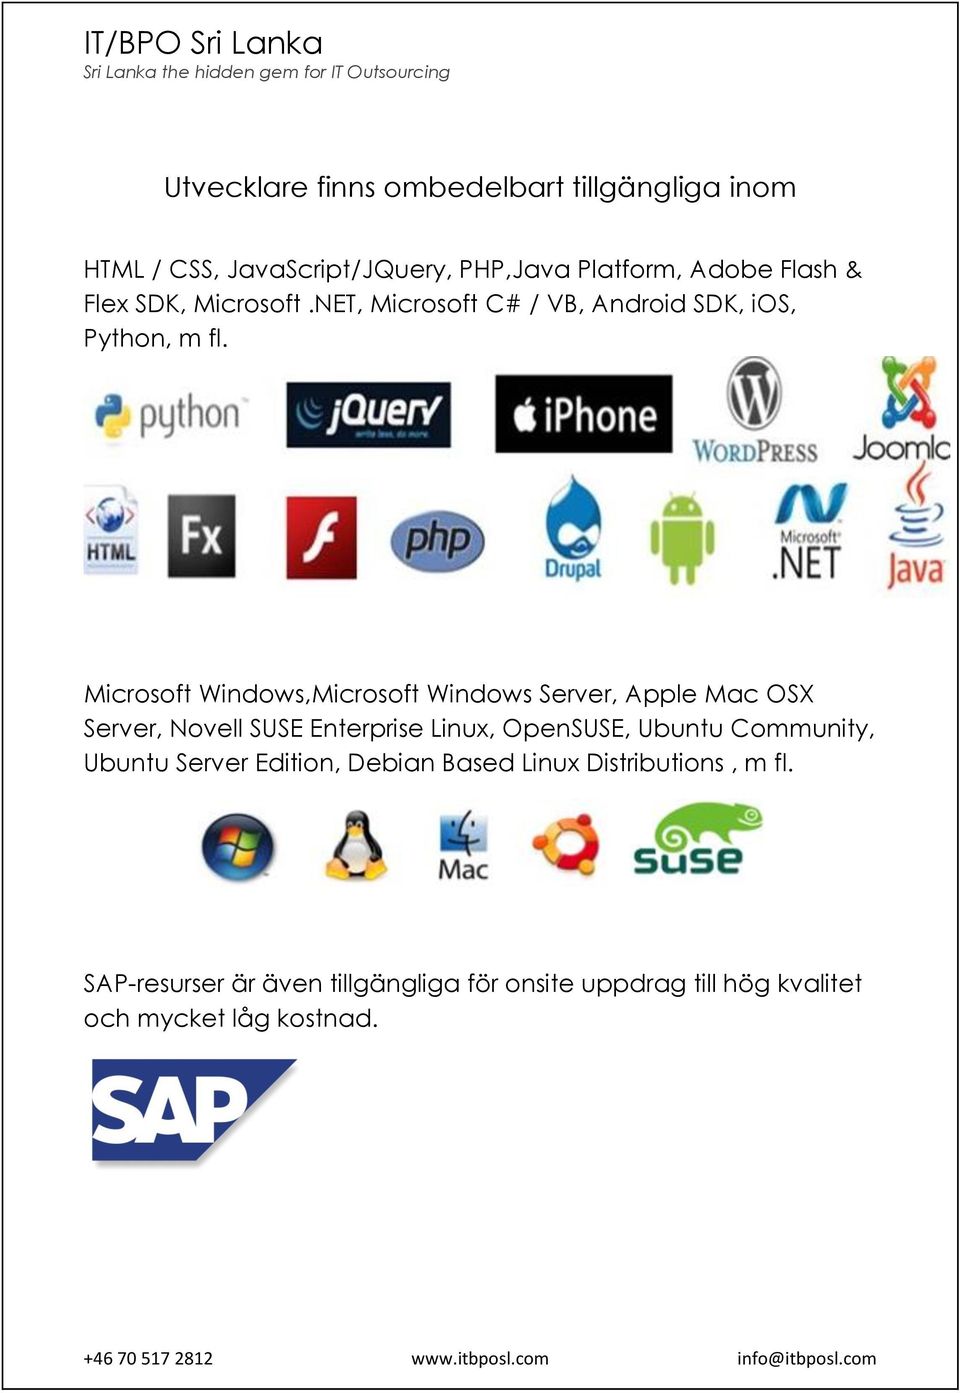 Microsoft Windows,Microsoft Windows Server, Apple Mac OSX Server, Novell SUSE Enterprise Linux, OpenSUSE, Ubuntu